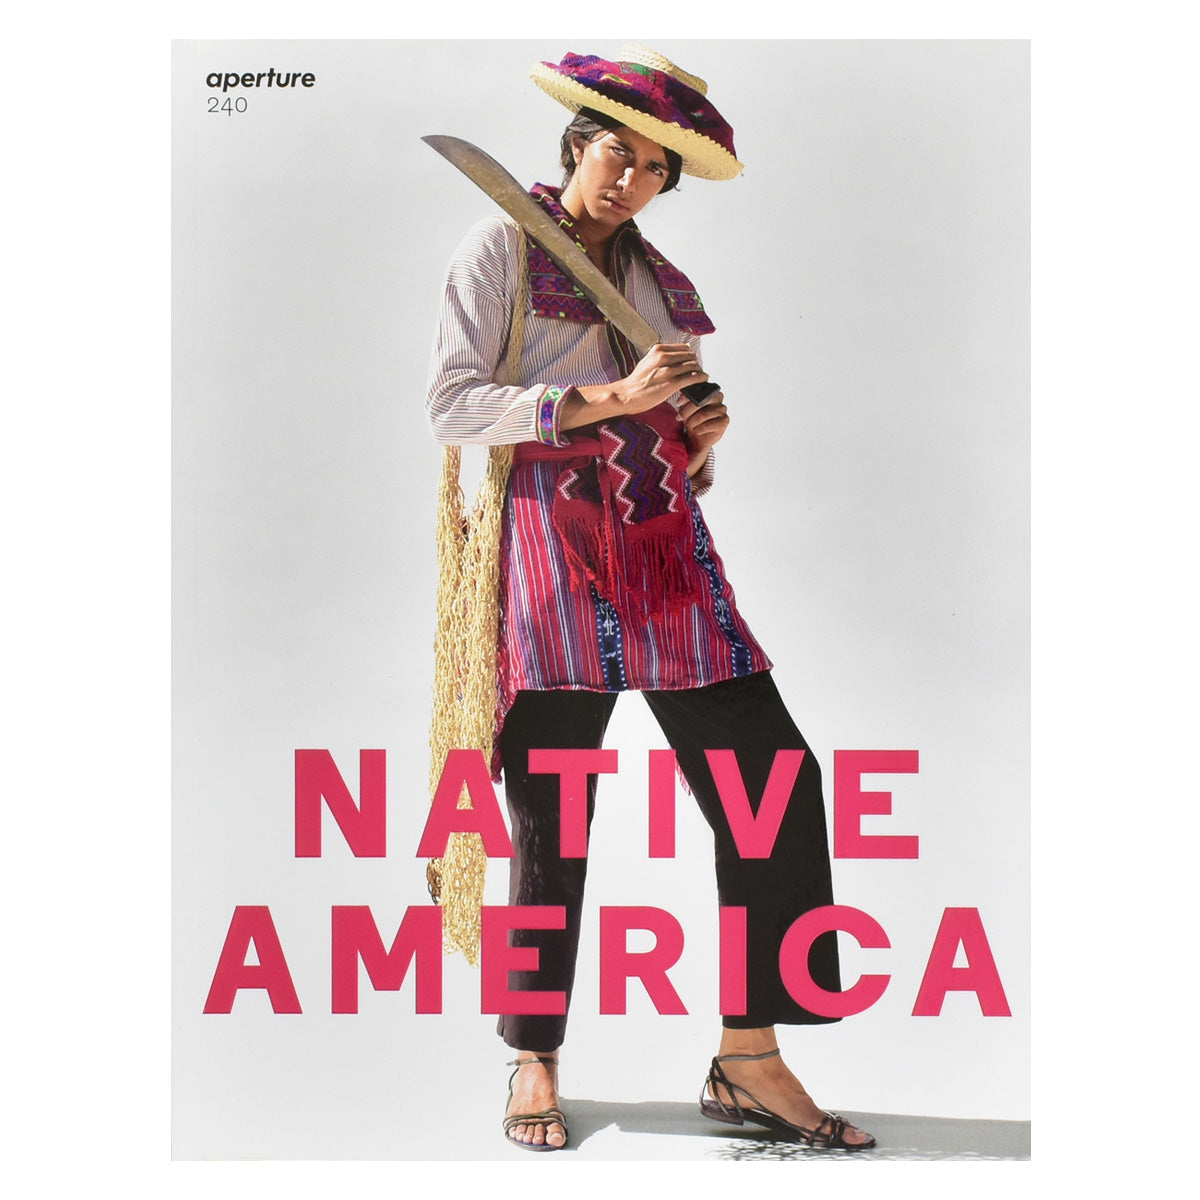 Native America Aperture 240's front cover.